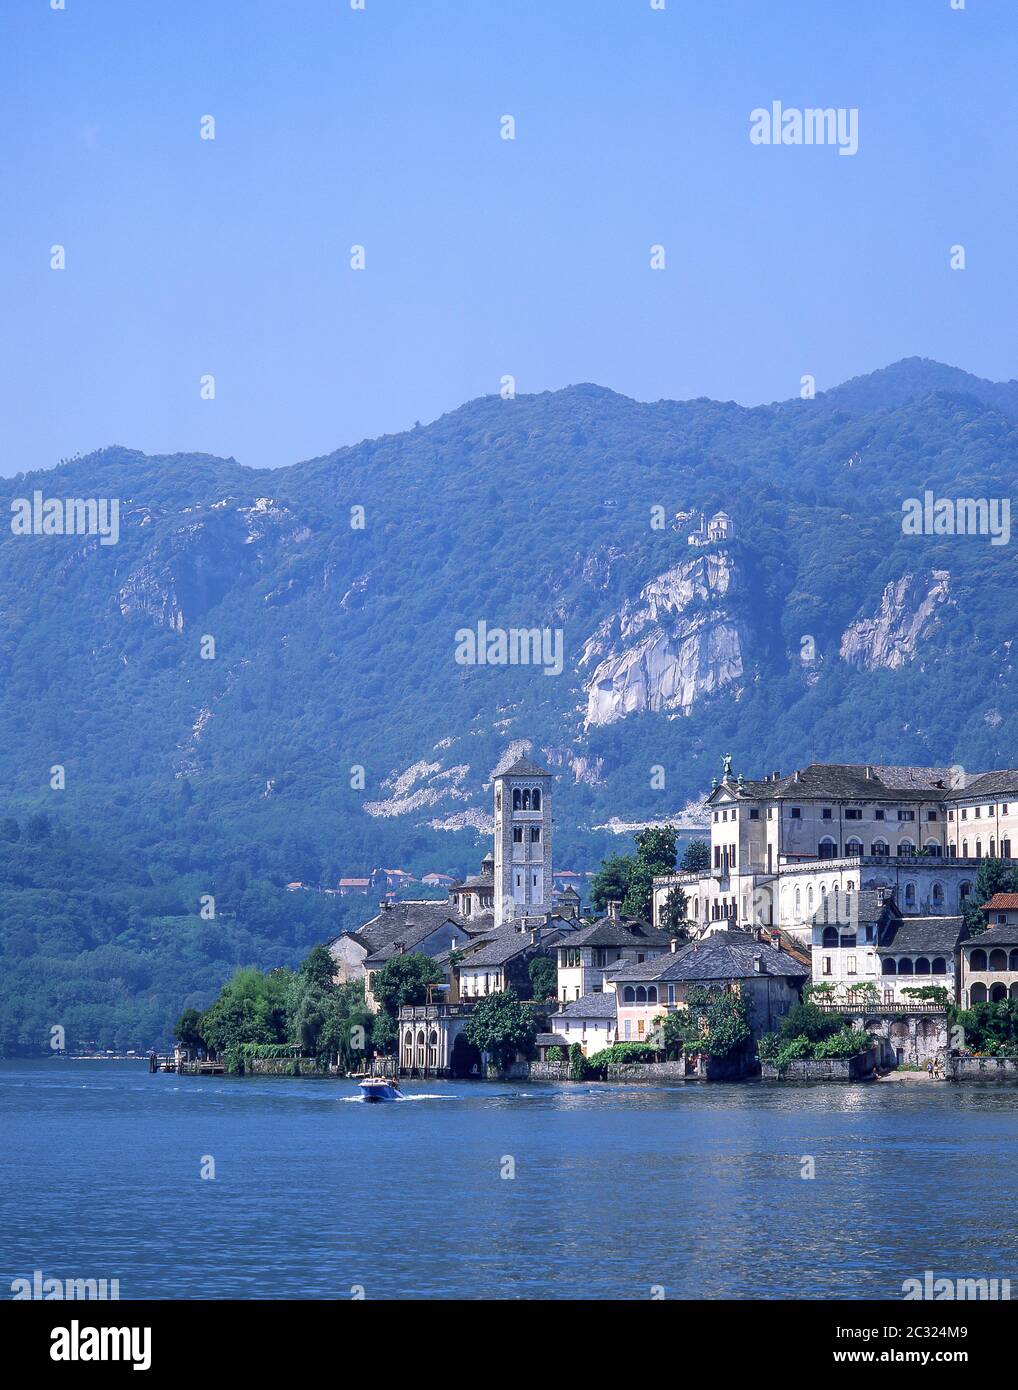 Isola San Giulio on Lake Orta, Orta San Giulio, Province of Novara, Piemonte (Piedmont) Region, Italy Stock Photo